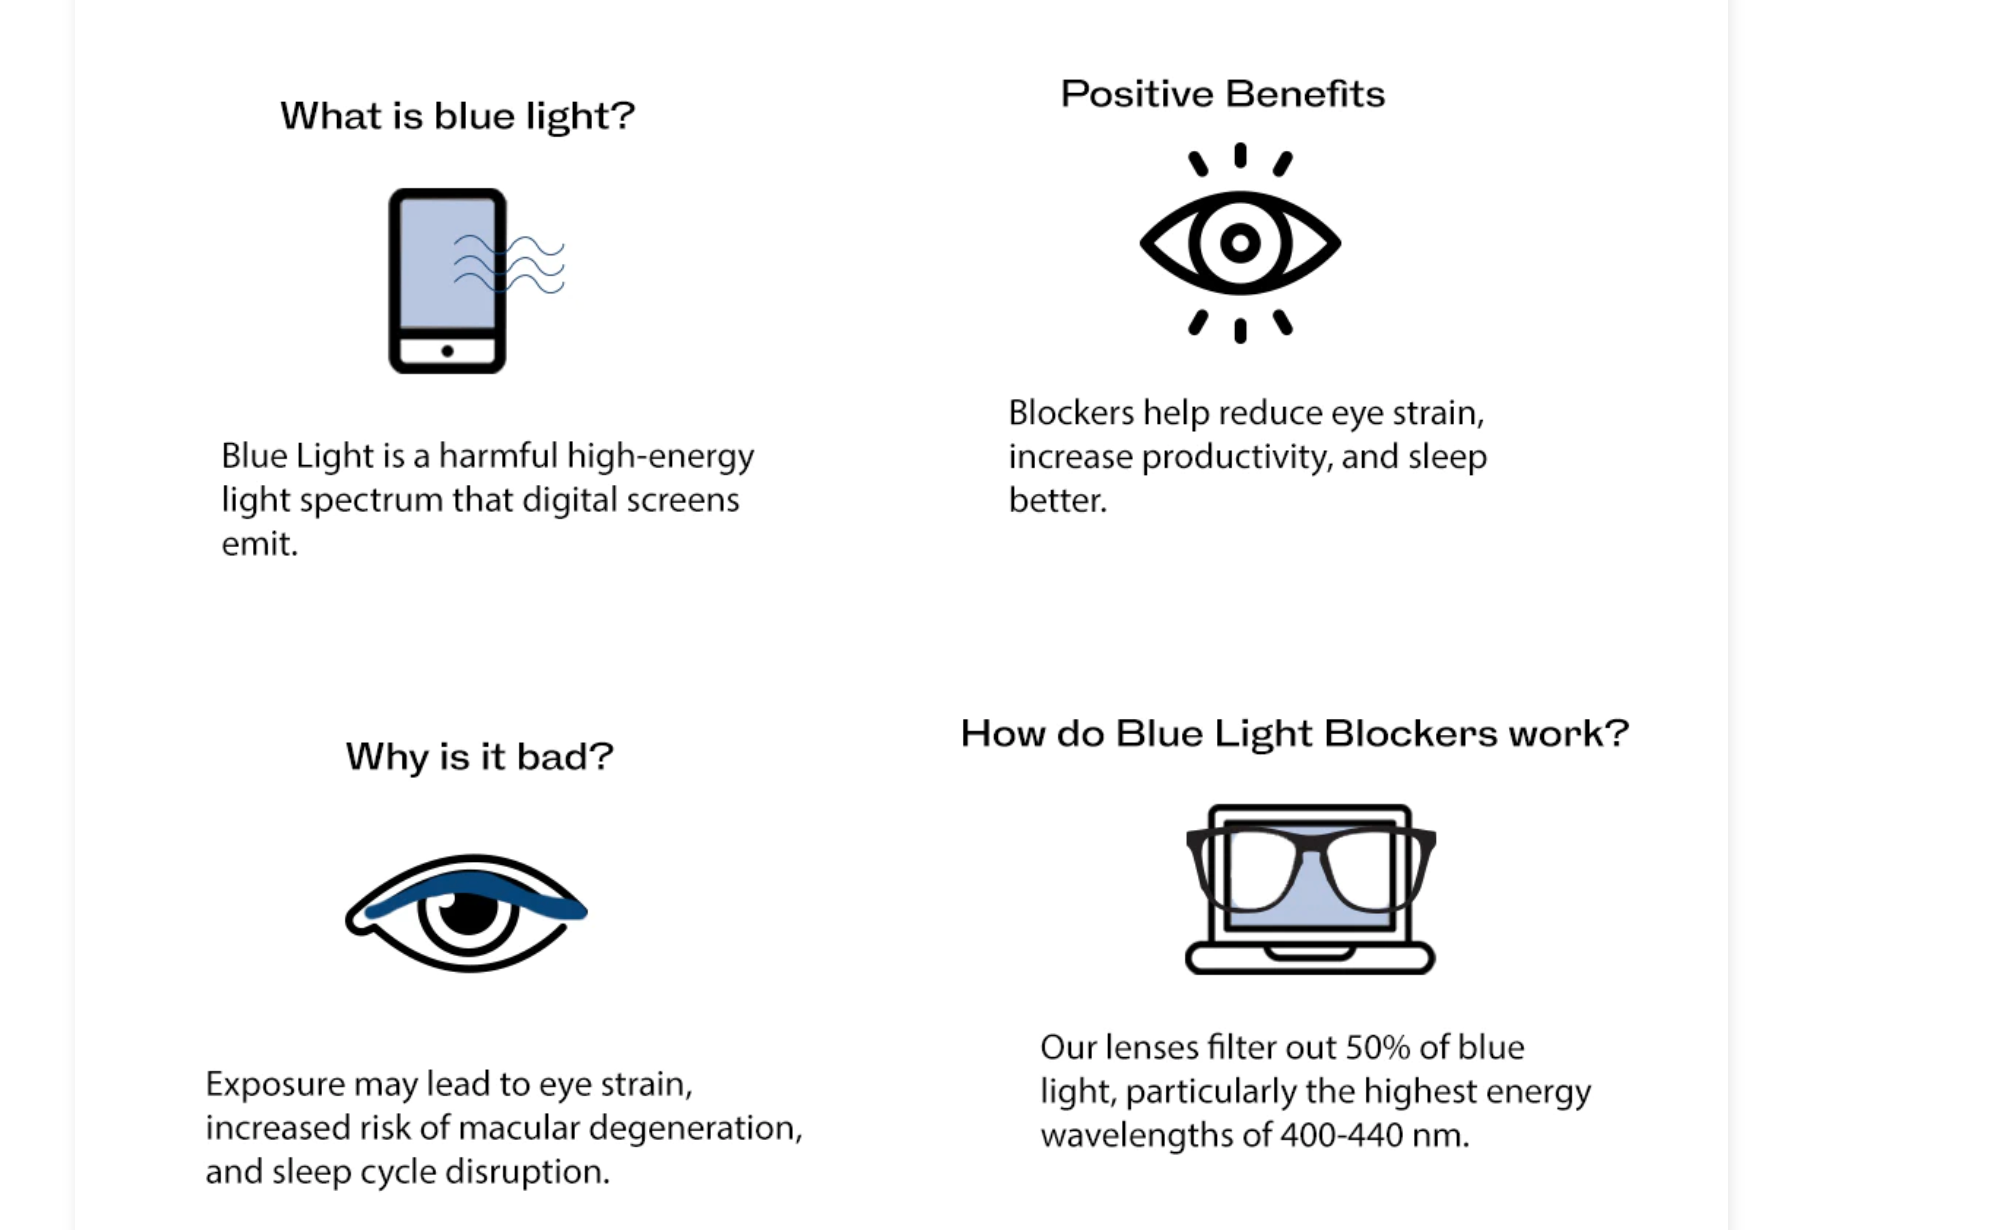 Benefits of Blue Light Blockers